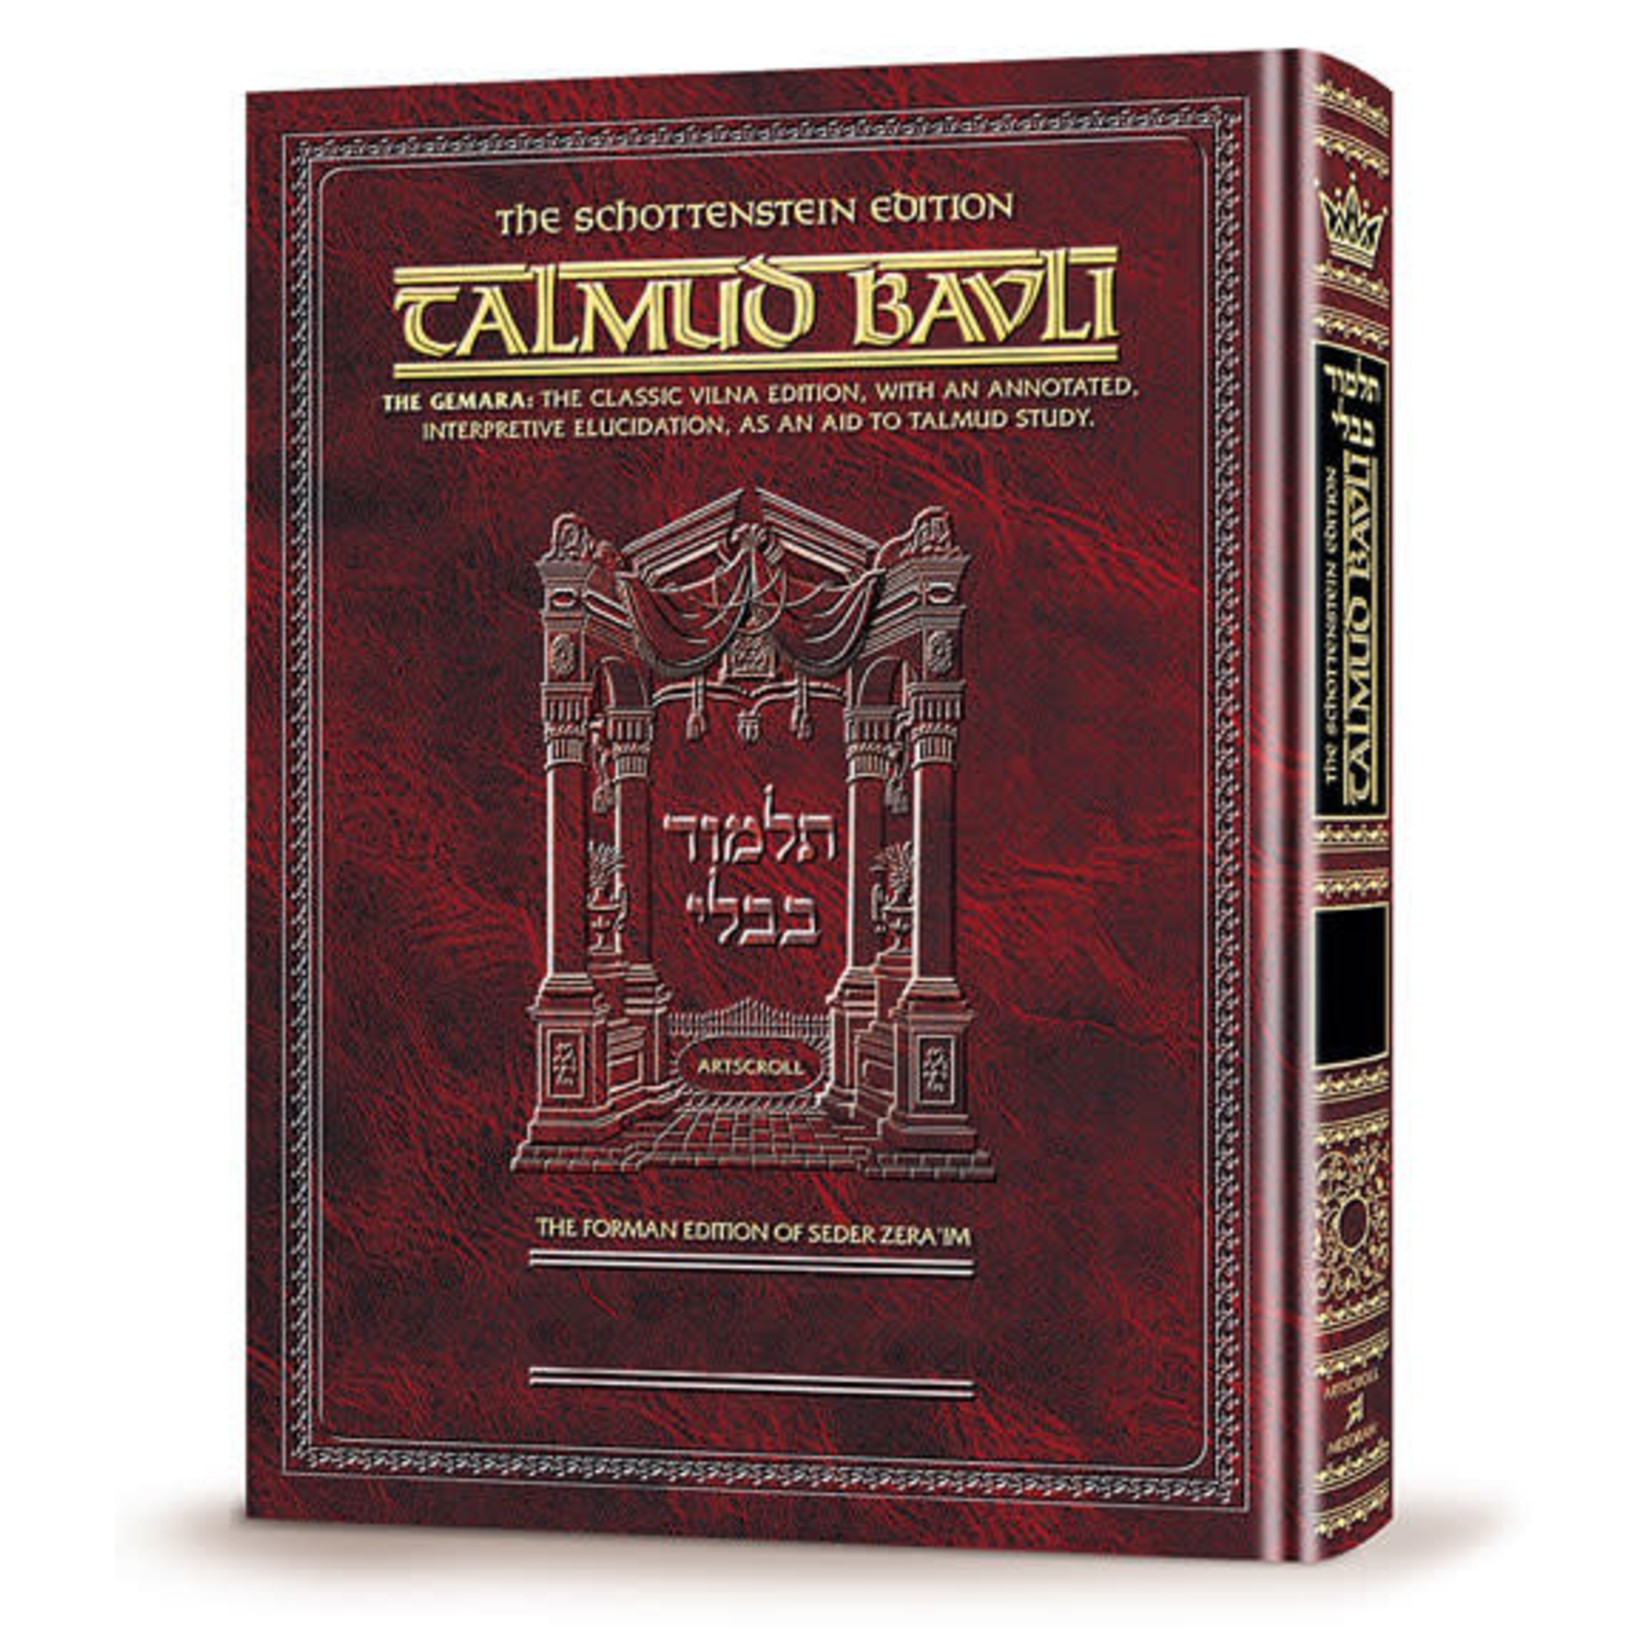 TEMURAH - ArtScroll Schottenstein Hebrew/English Talmud Bavli, Full Size